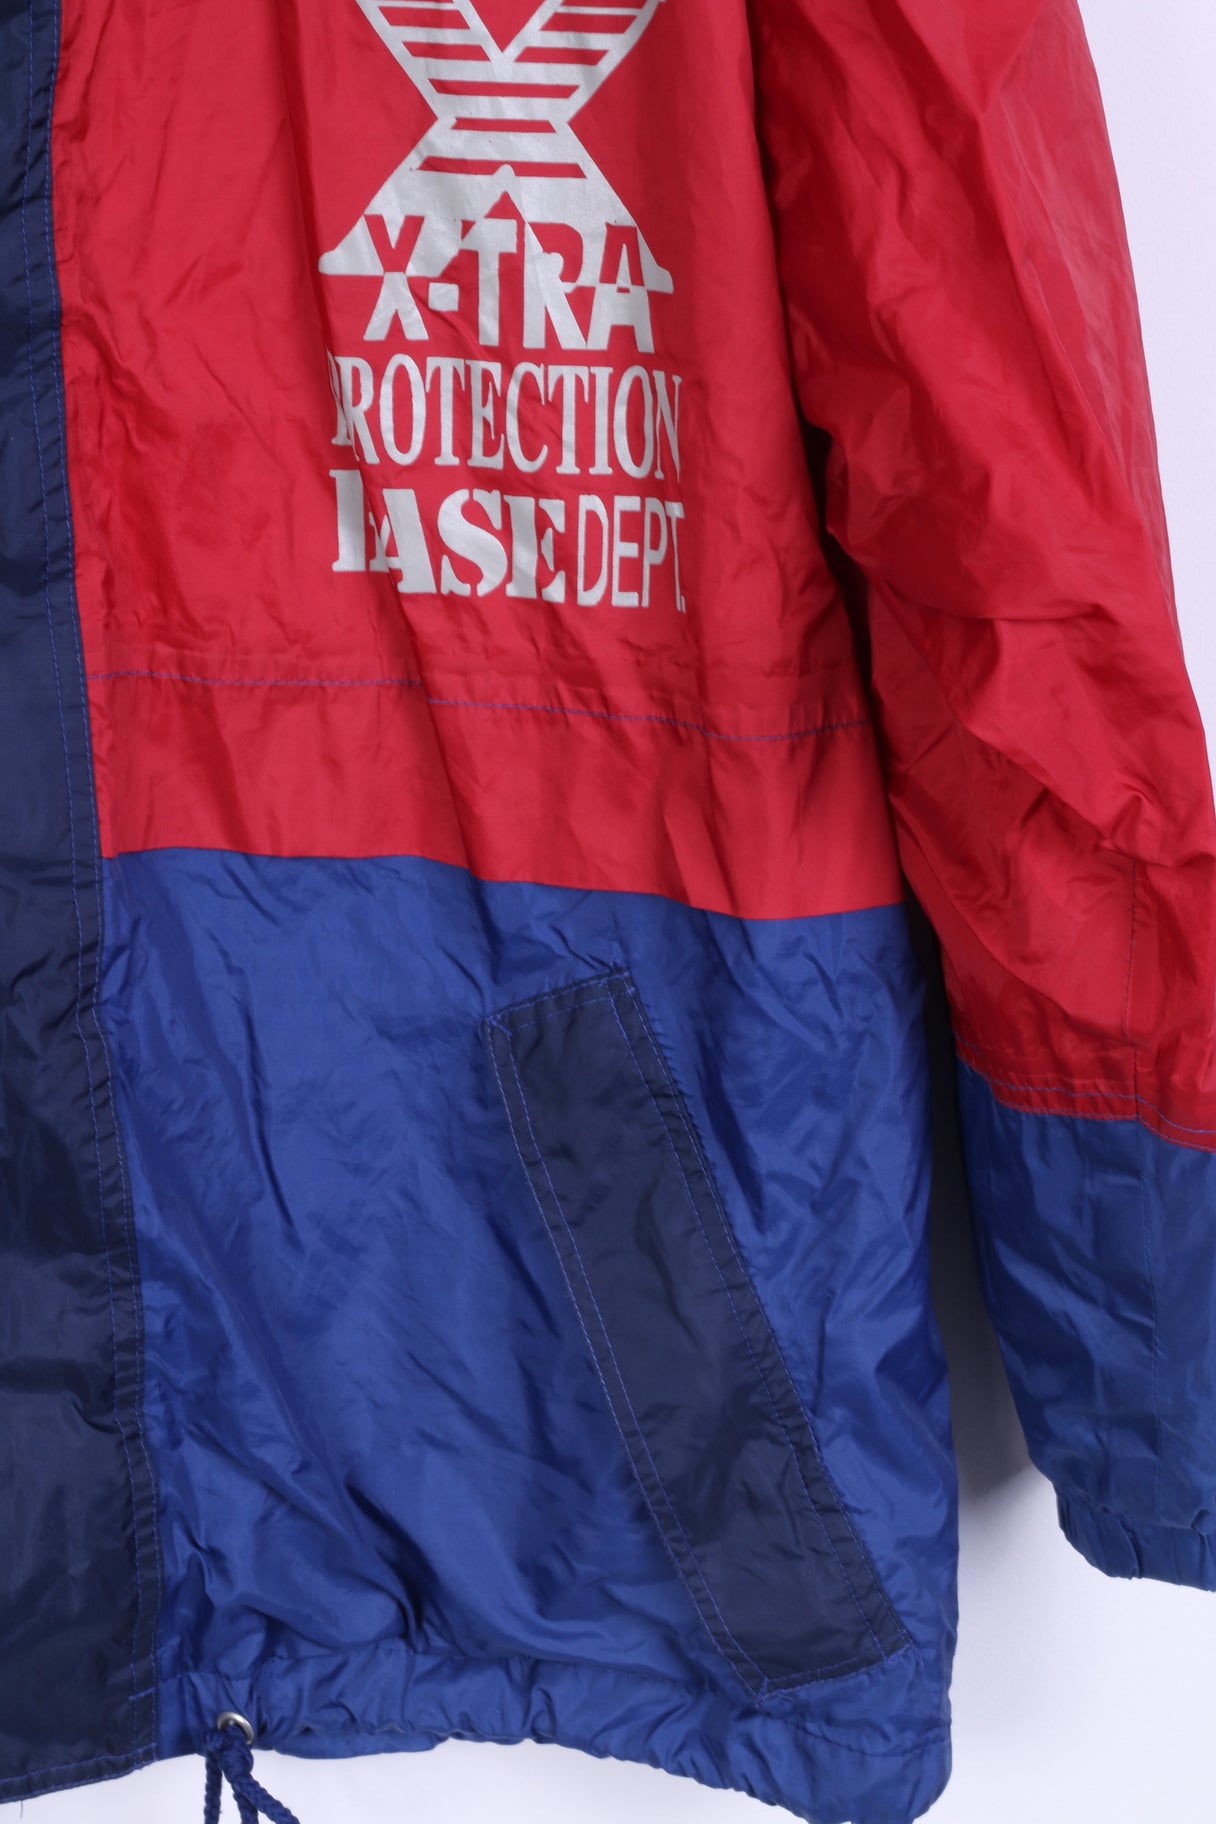 Protection Base Mens L Jacket Red Nylon Waterproof Hidden Hood Sport Top